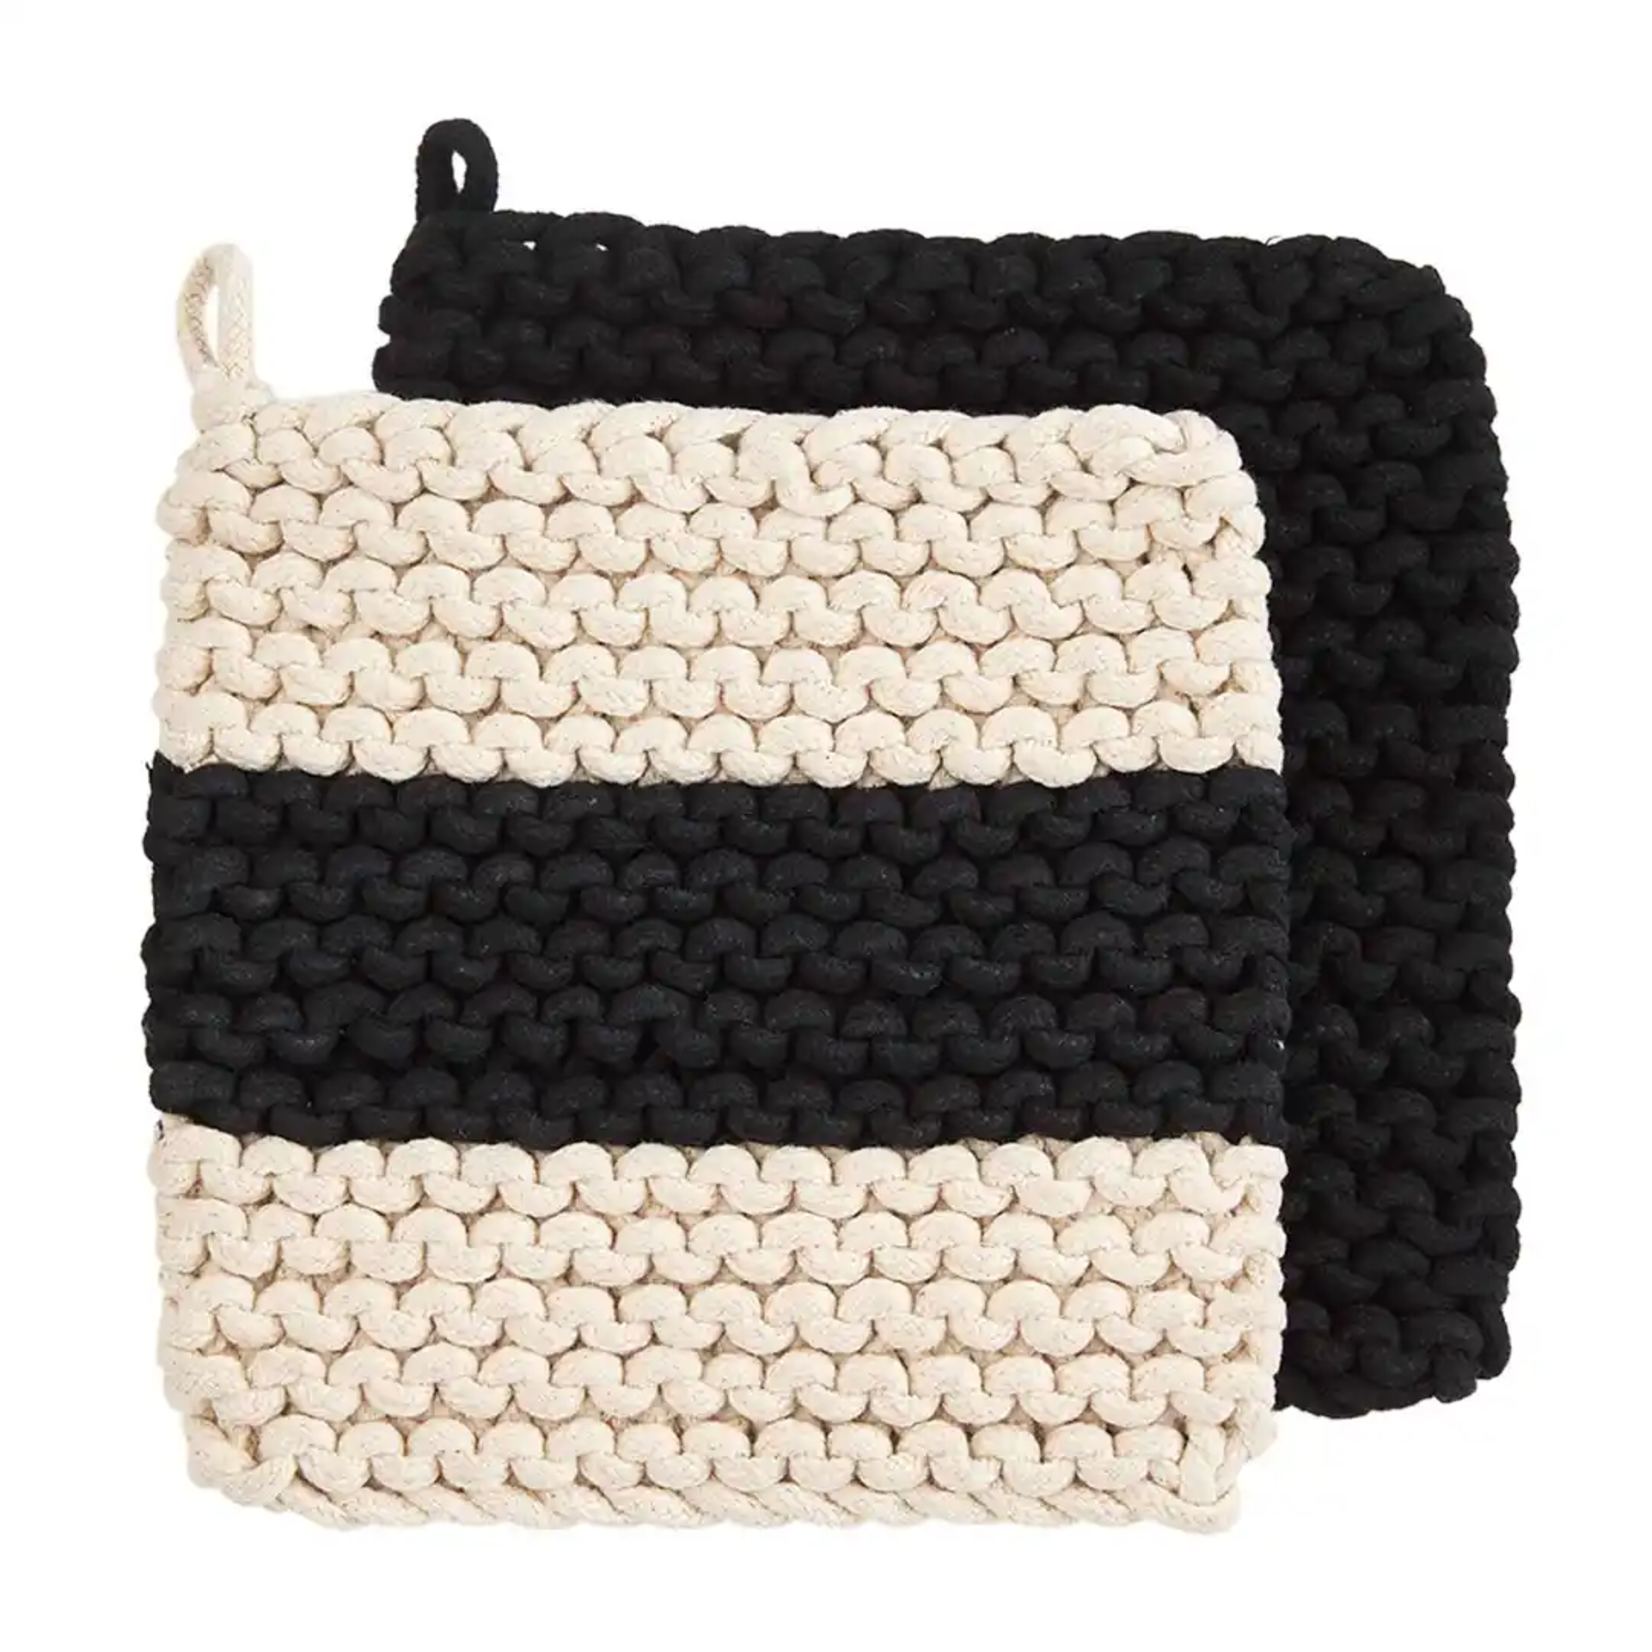 Mud Pie One Stripe Black Crochet Potholder -s/2